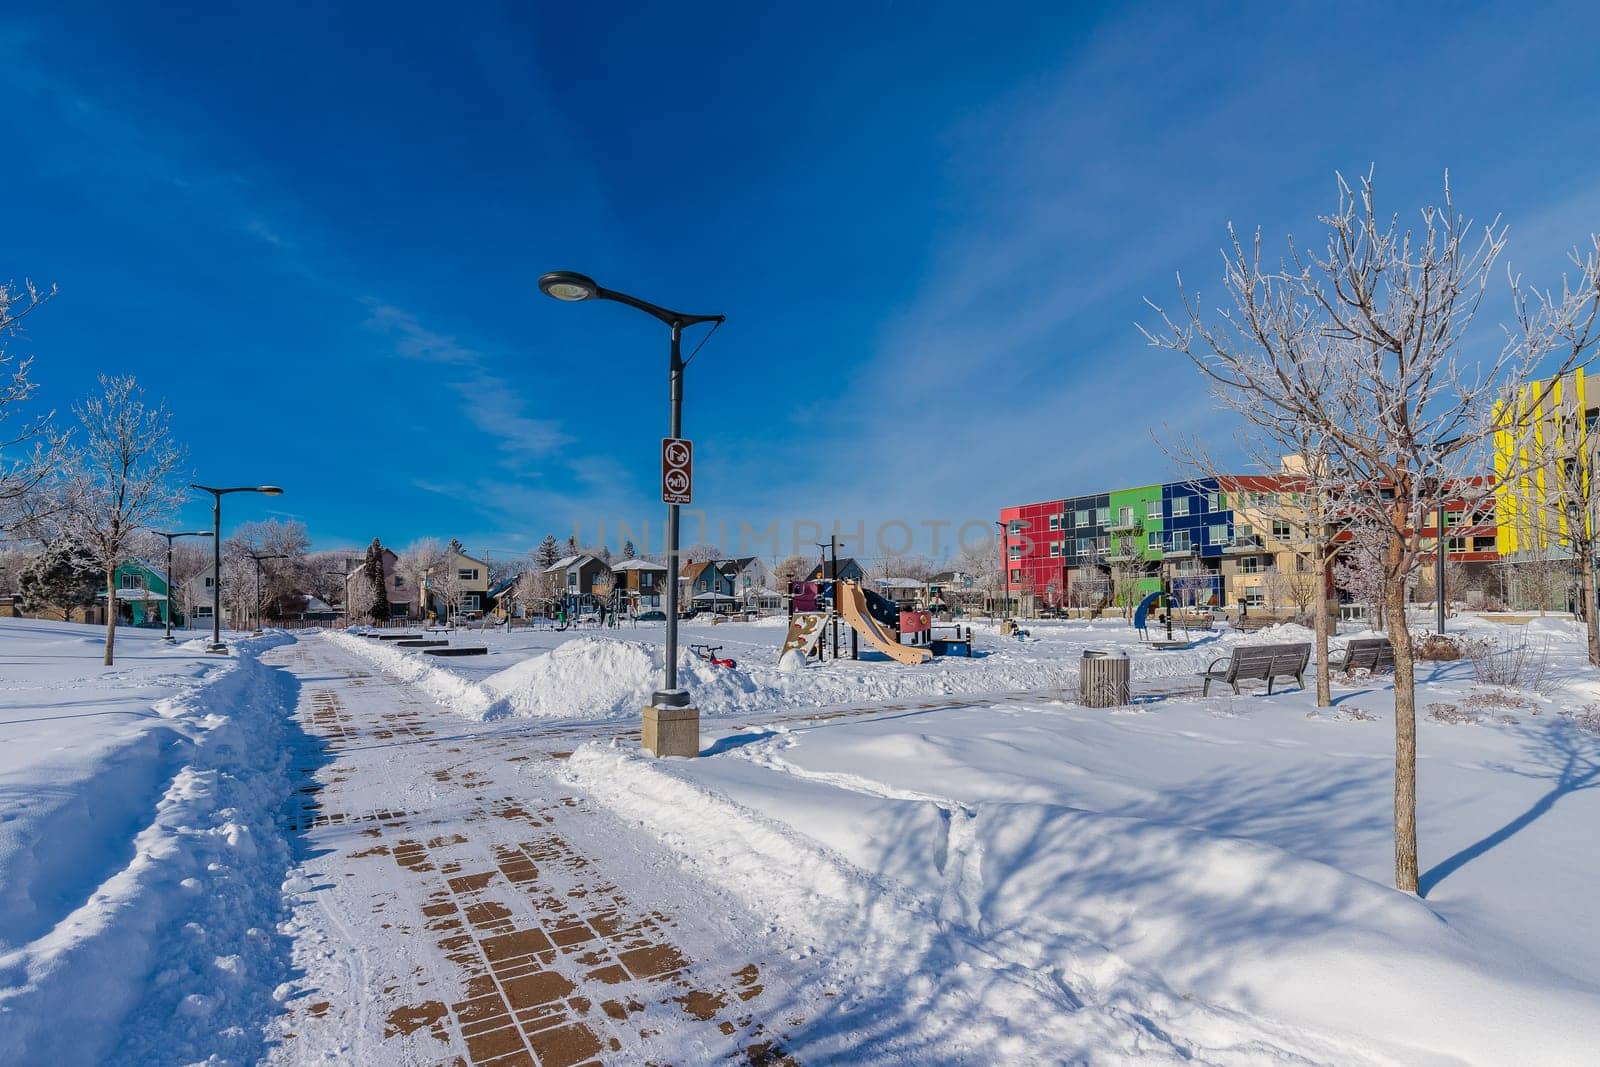 Isinger Park in Saskatoon, Canada by sprokop